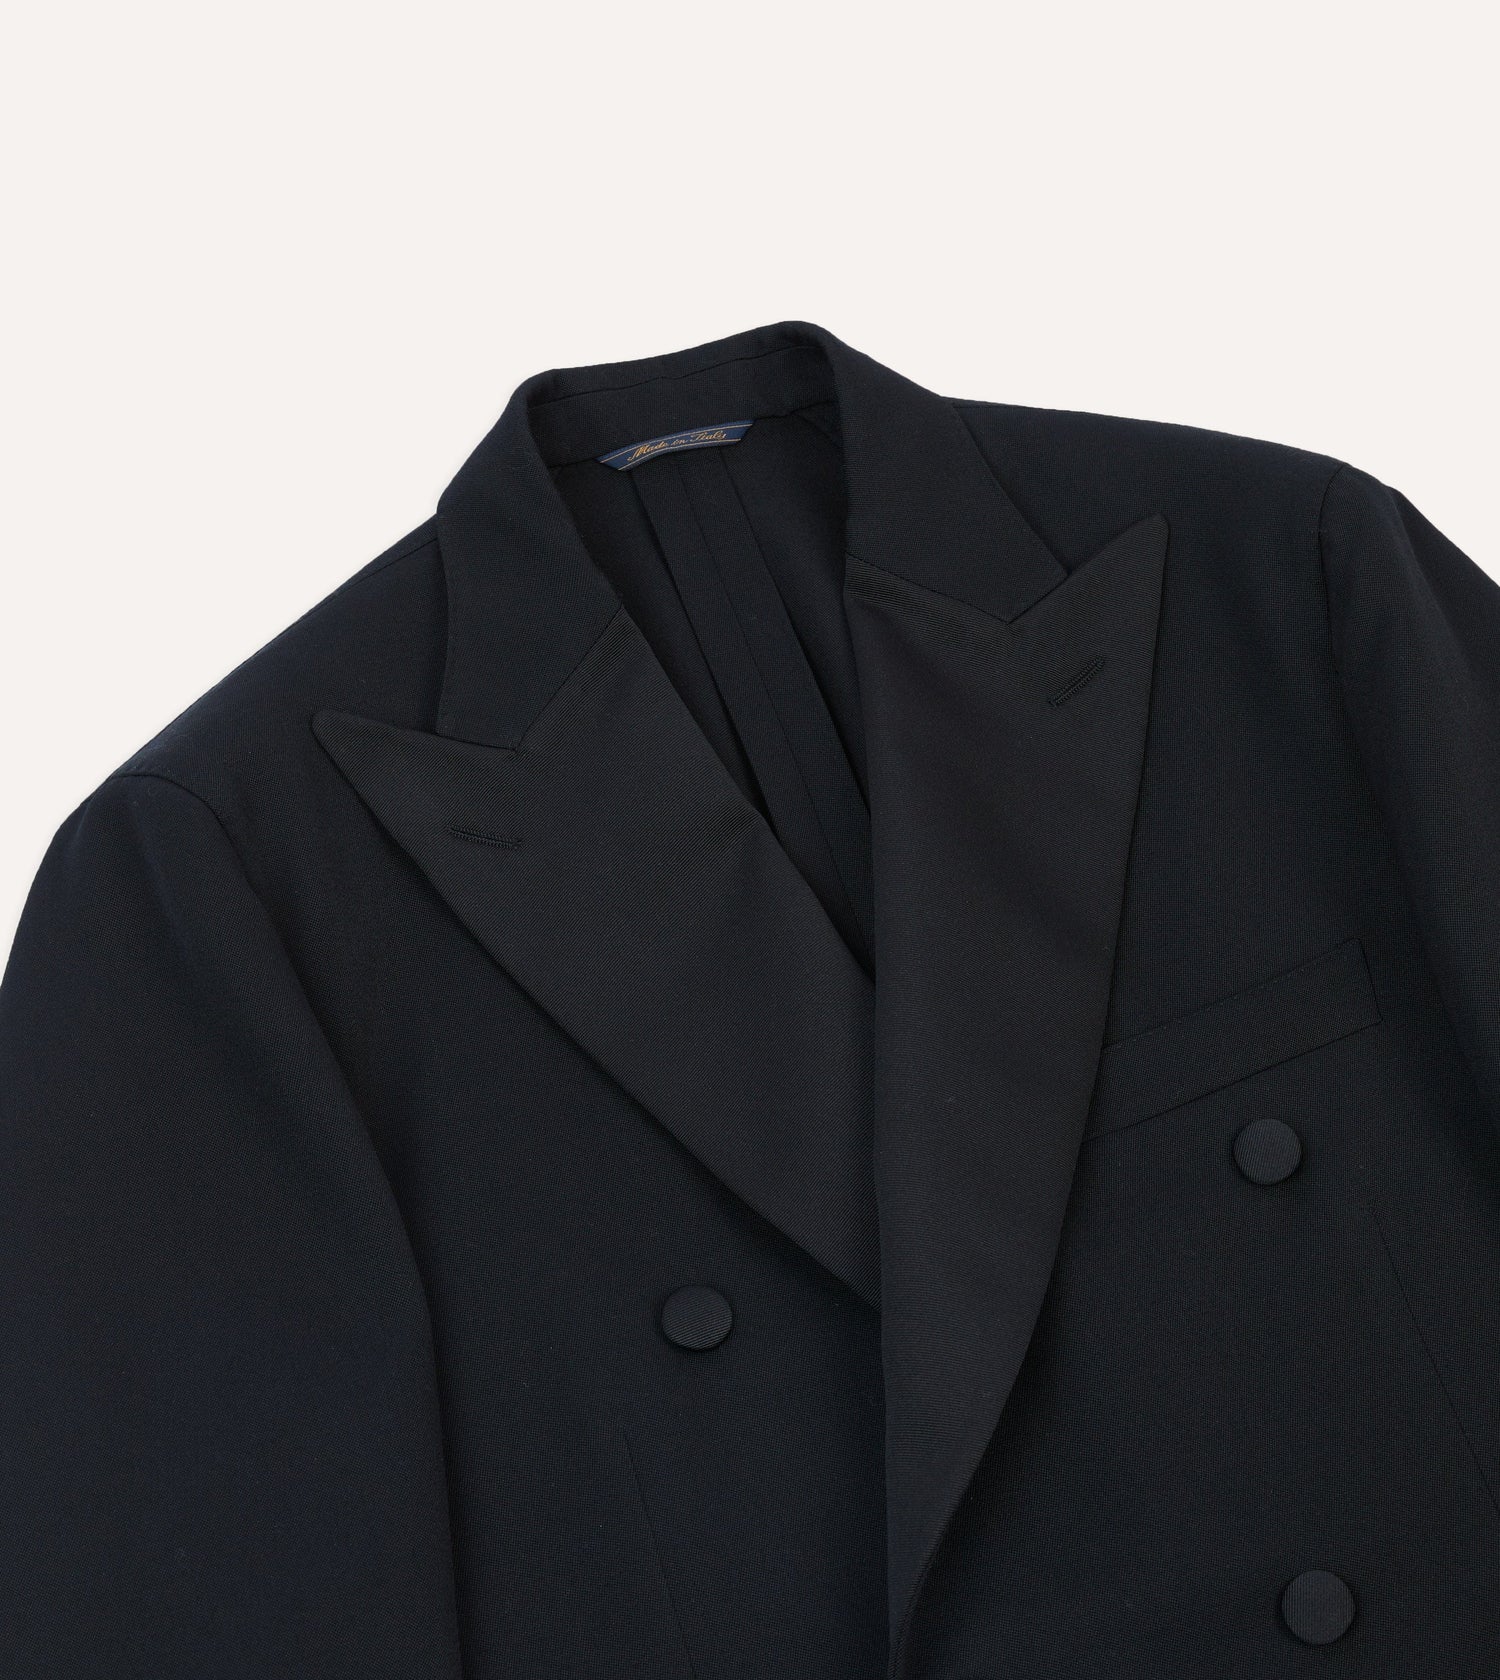 Black Barathea Wool Double-Breasted Dinner Jacket